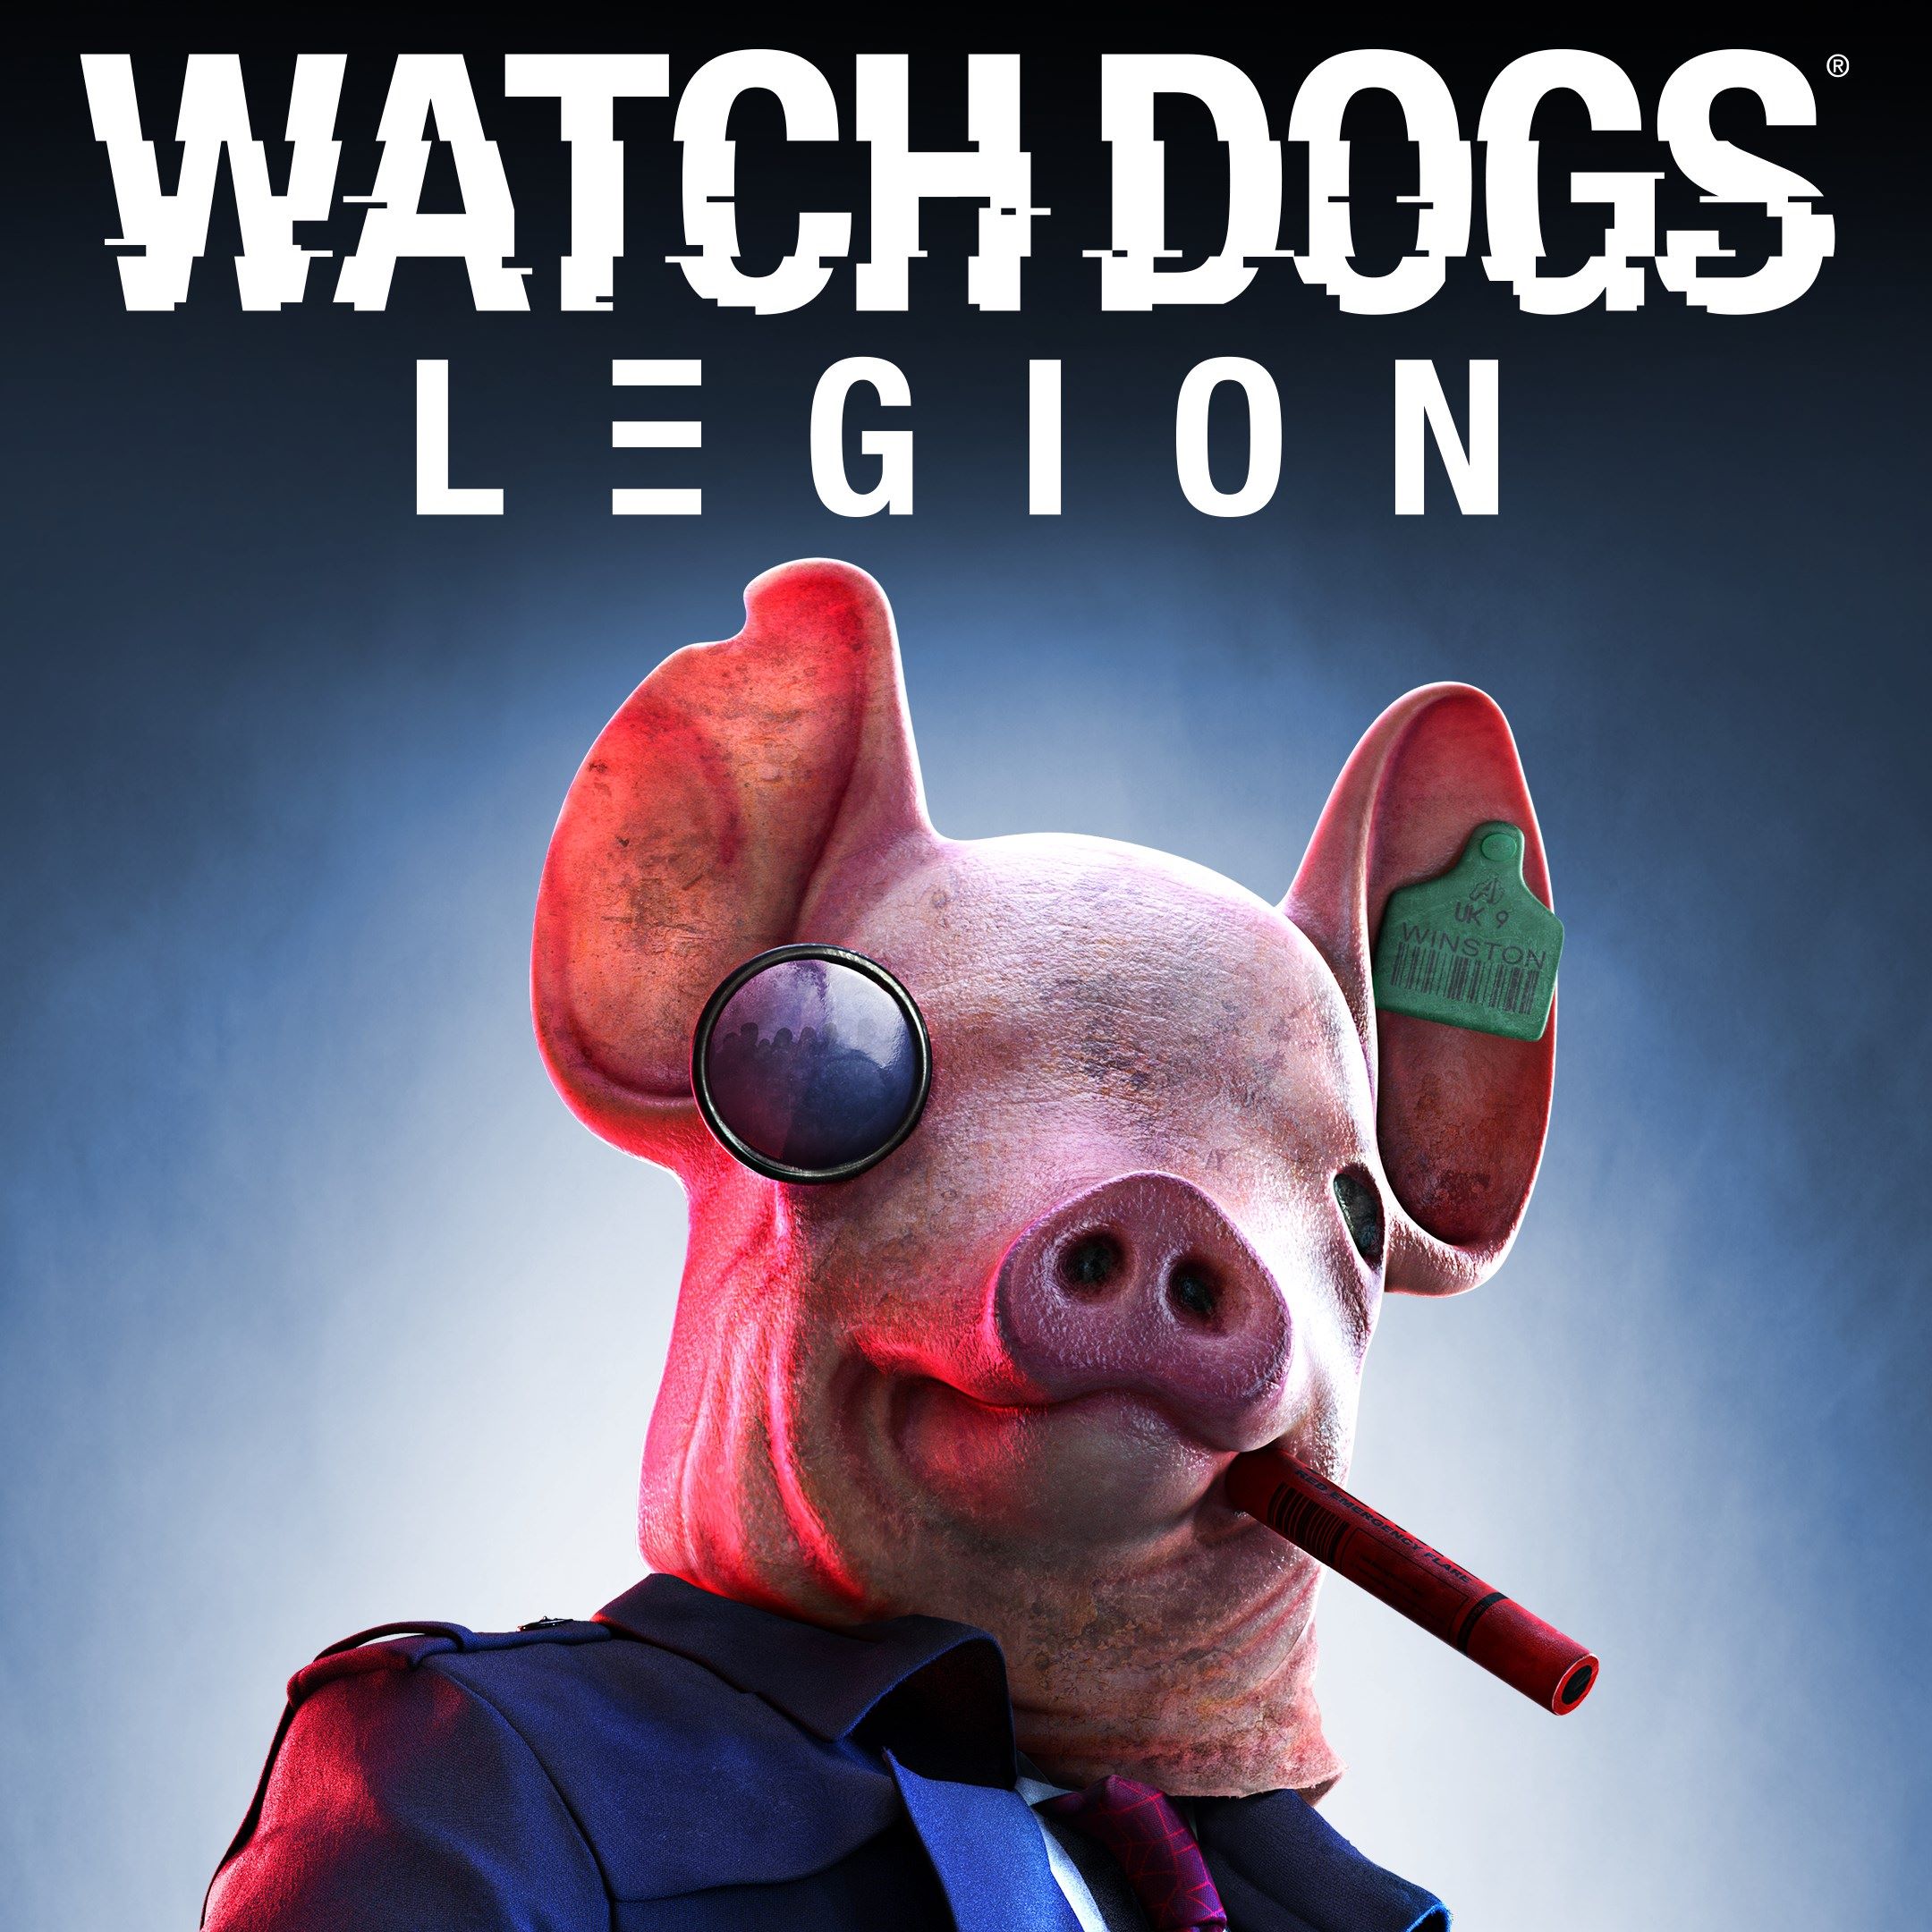 Watch Dogs: Legion Bloodline trailer drops during Ubisoft Forward